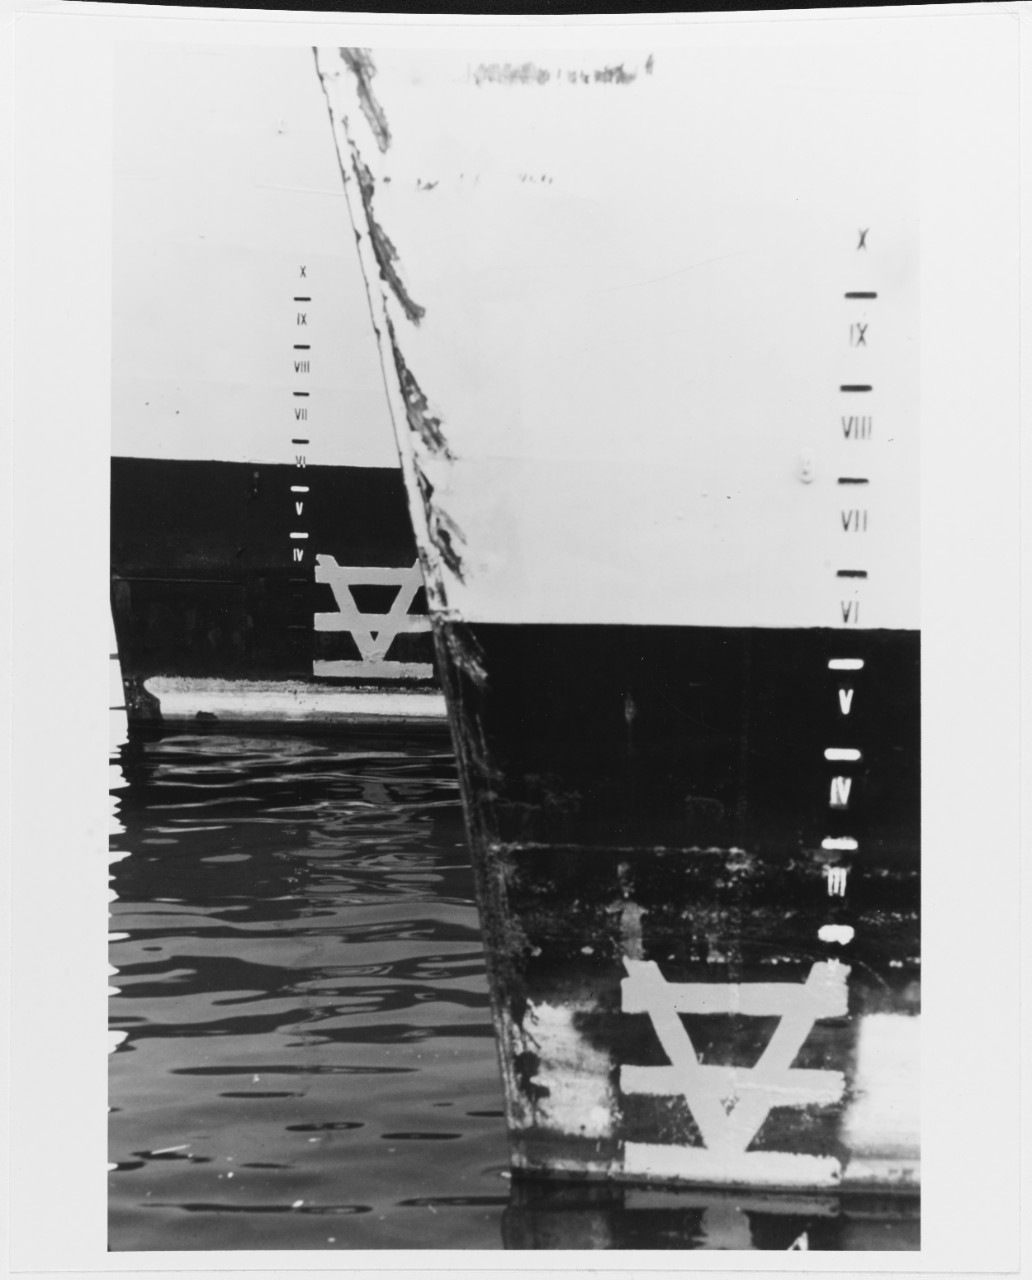 Draft Marks of two mothballed ships at the Philadelphia Naval Base, October 1978